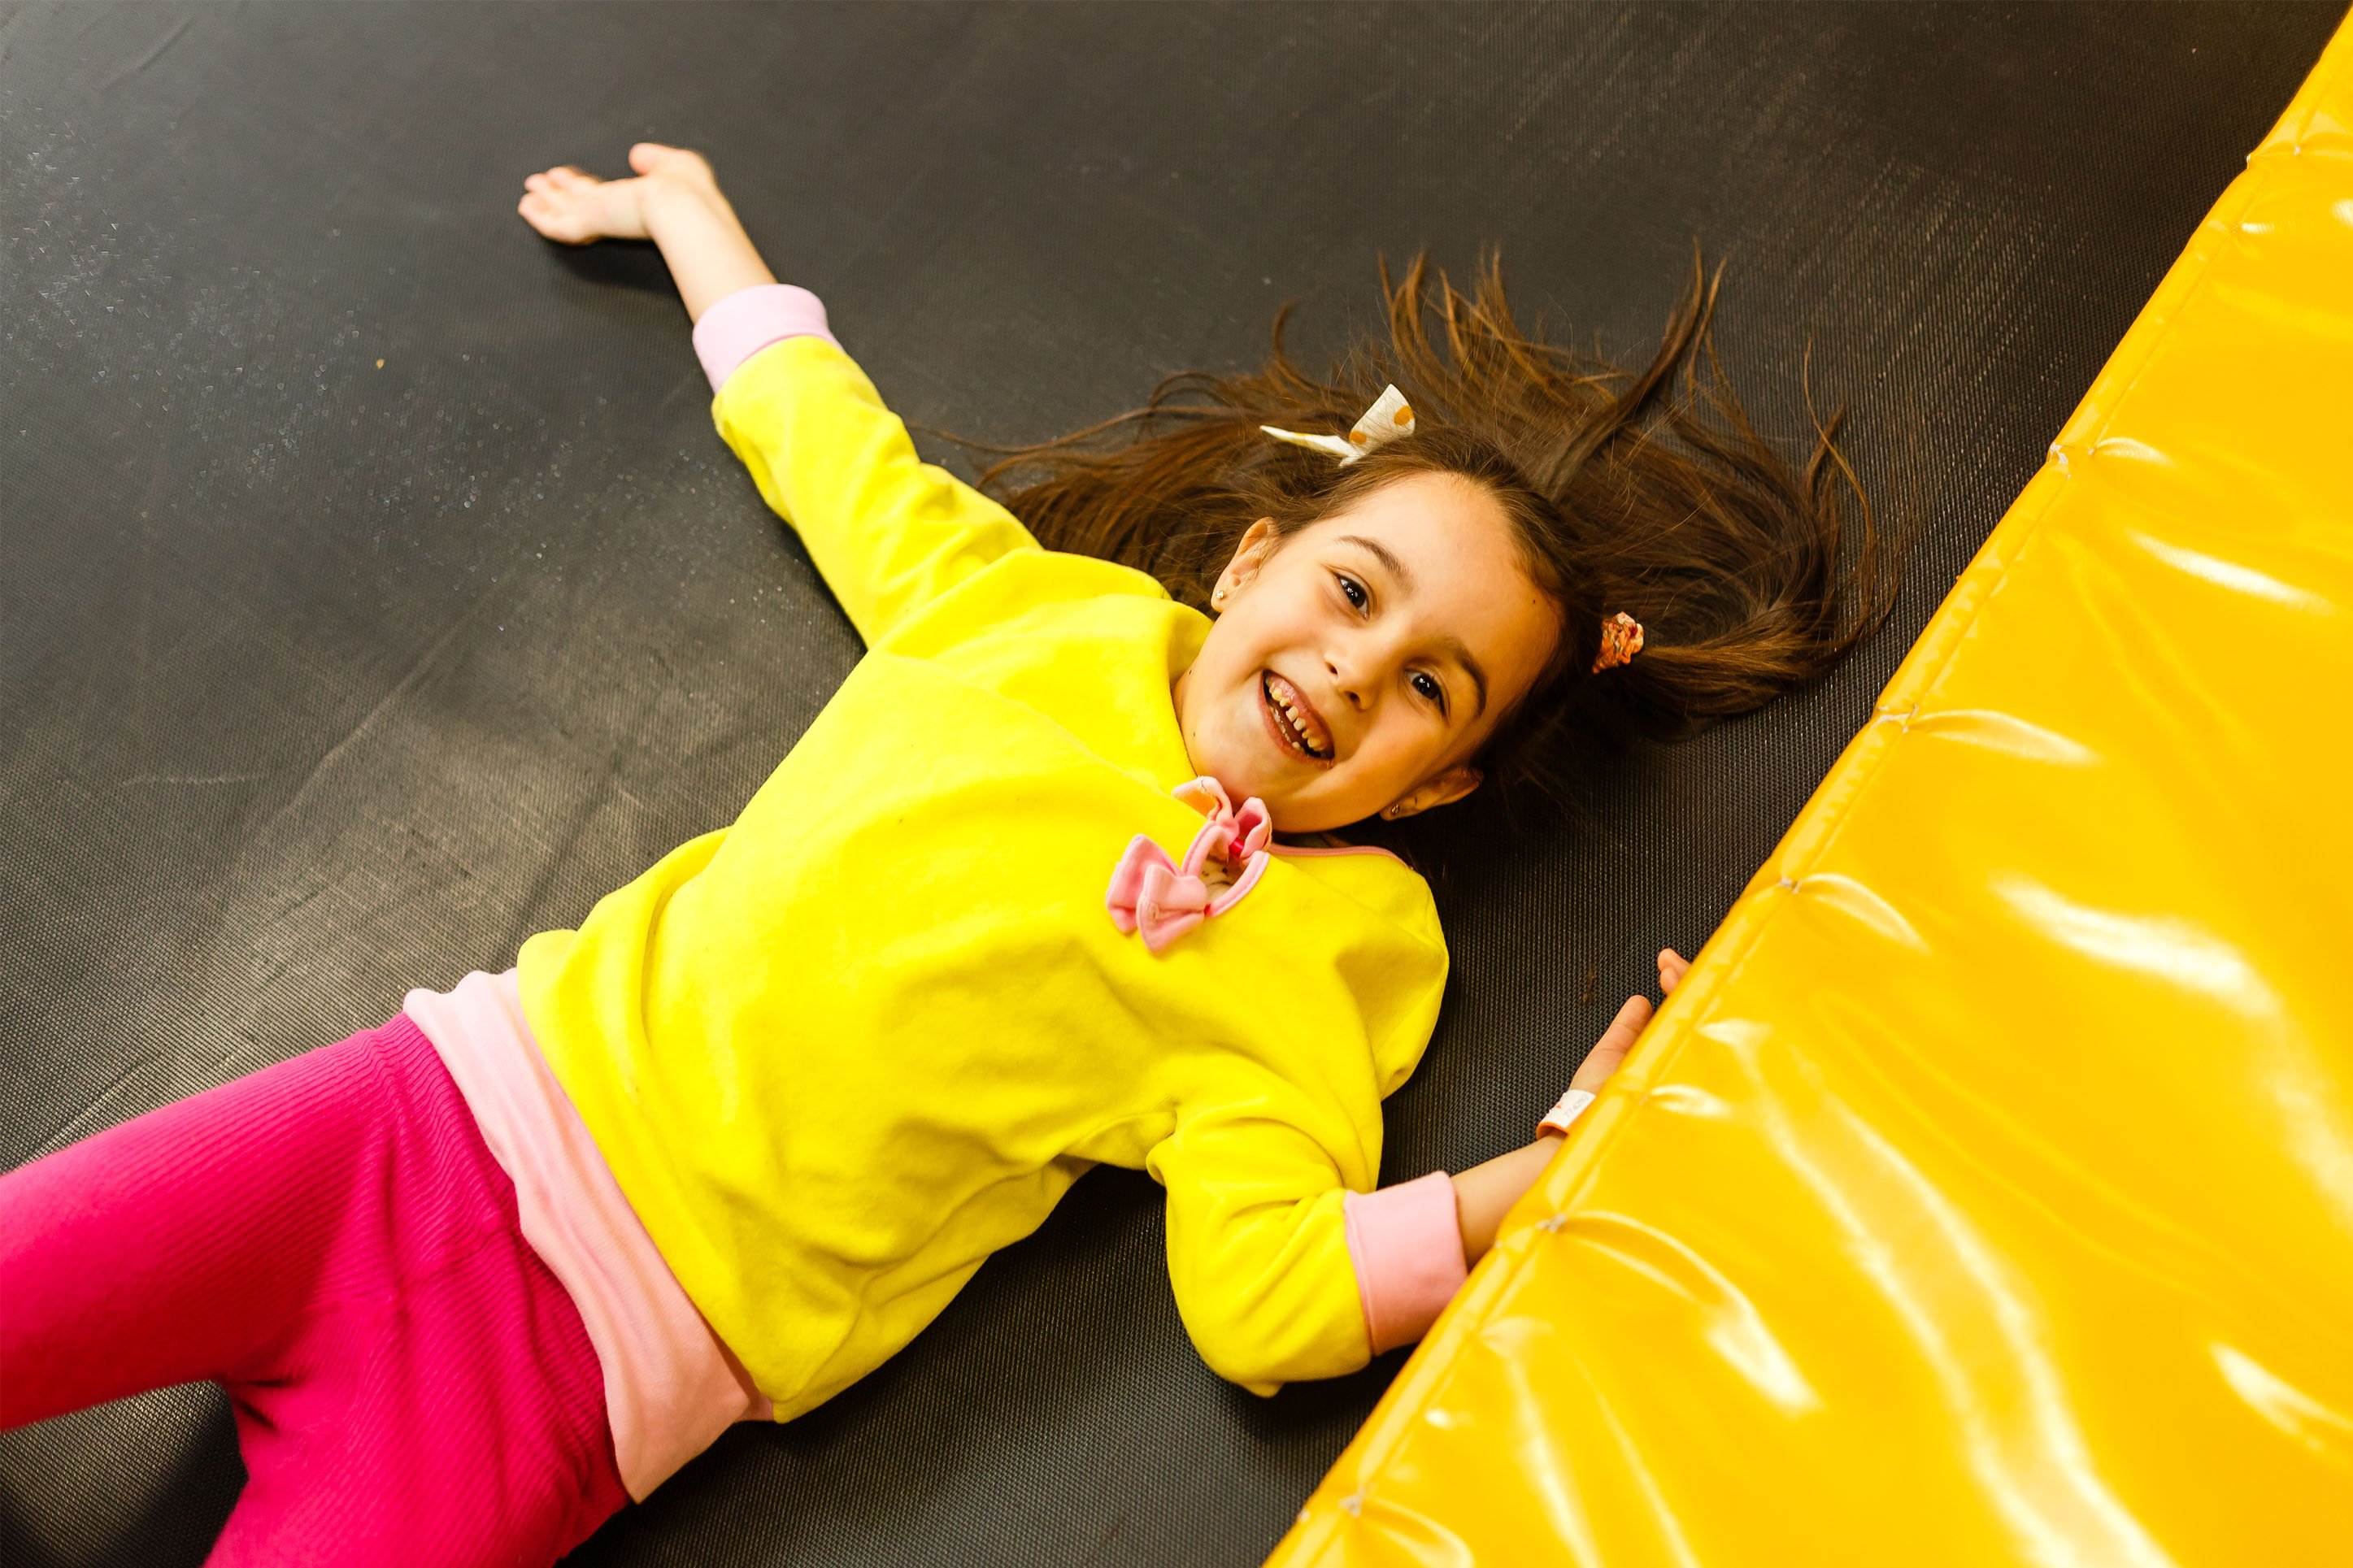 Young girl having fun in a kids zone